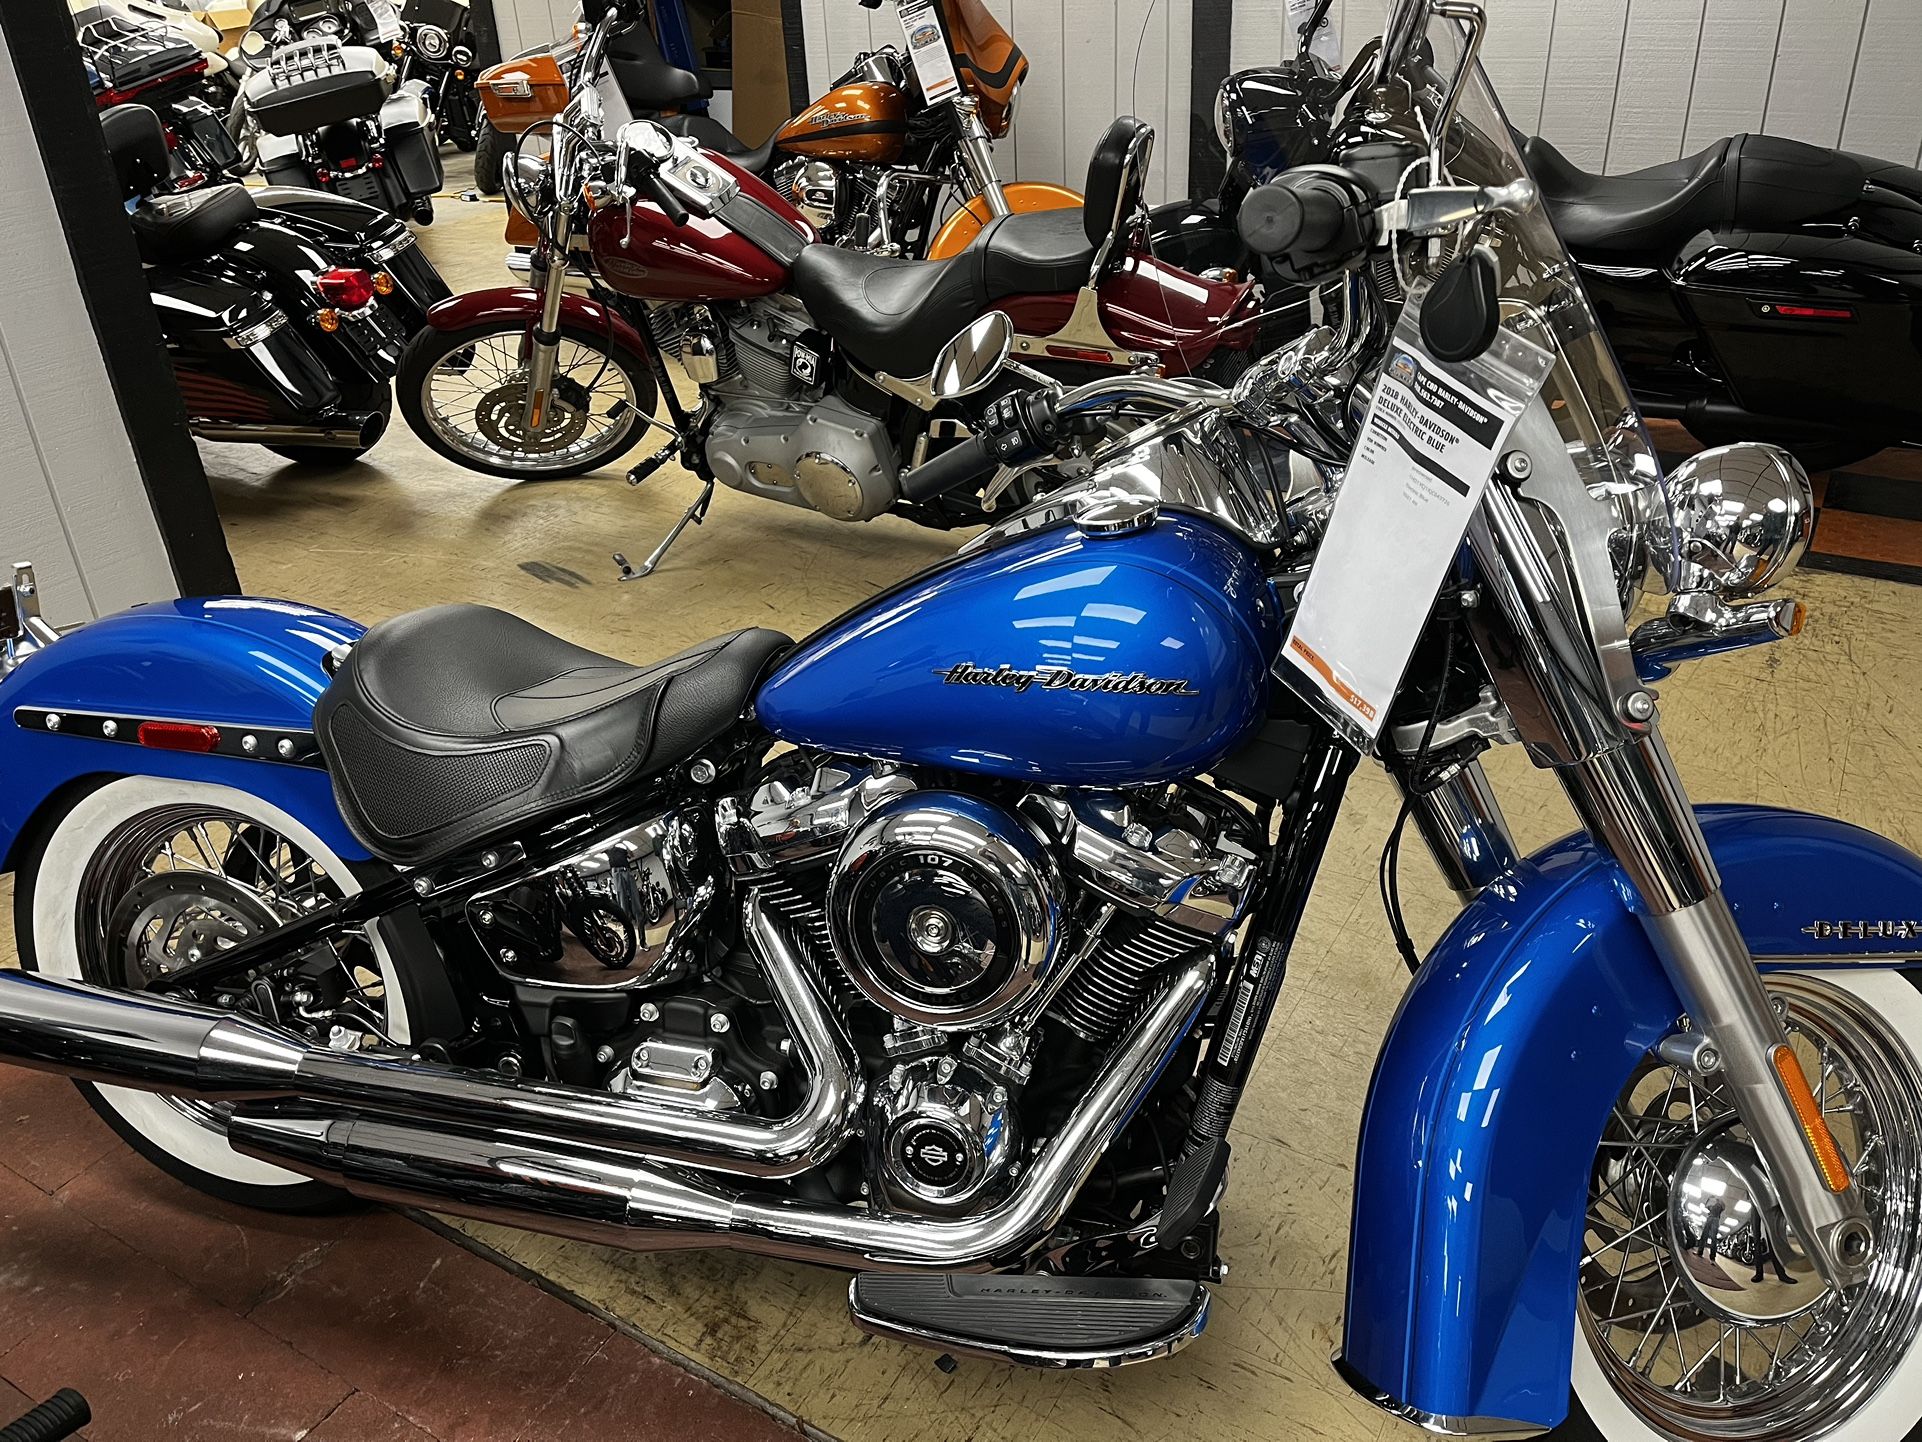 2018 Harley Davidson Softail Deluxe